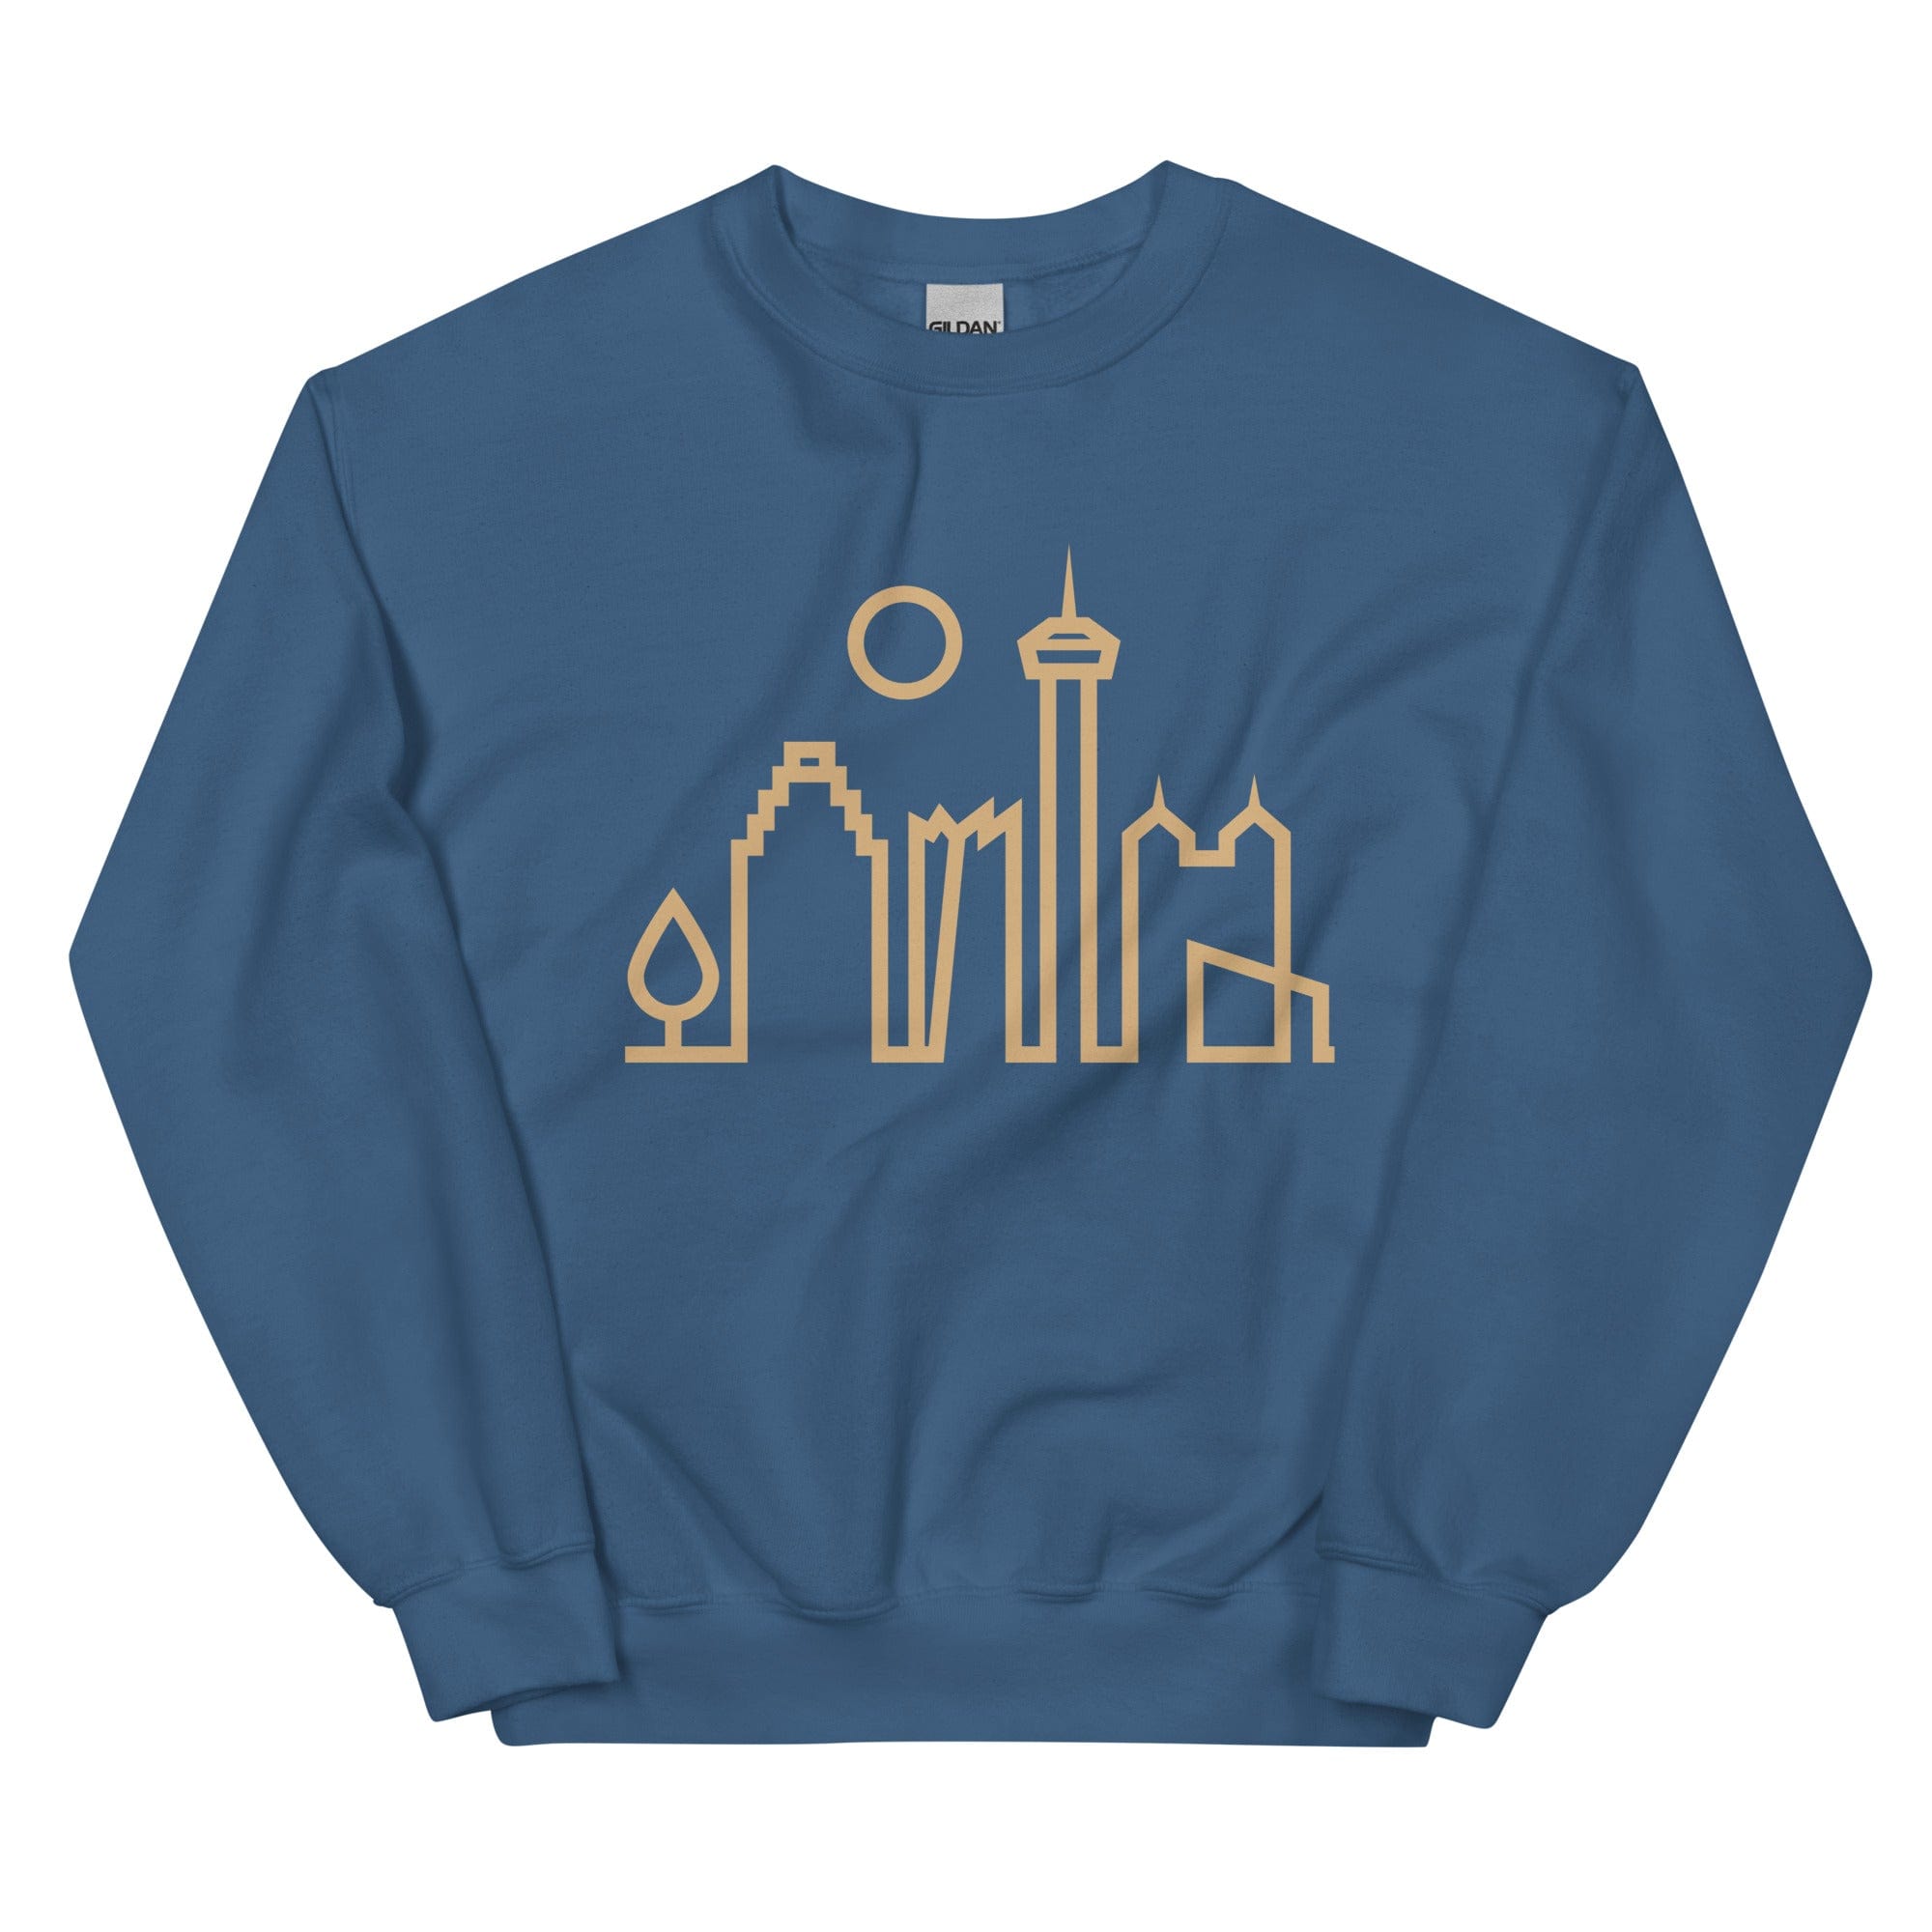 City Shirt Co San Antonio Urban Dweller Sweatshirt Indigo Blue / S